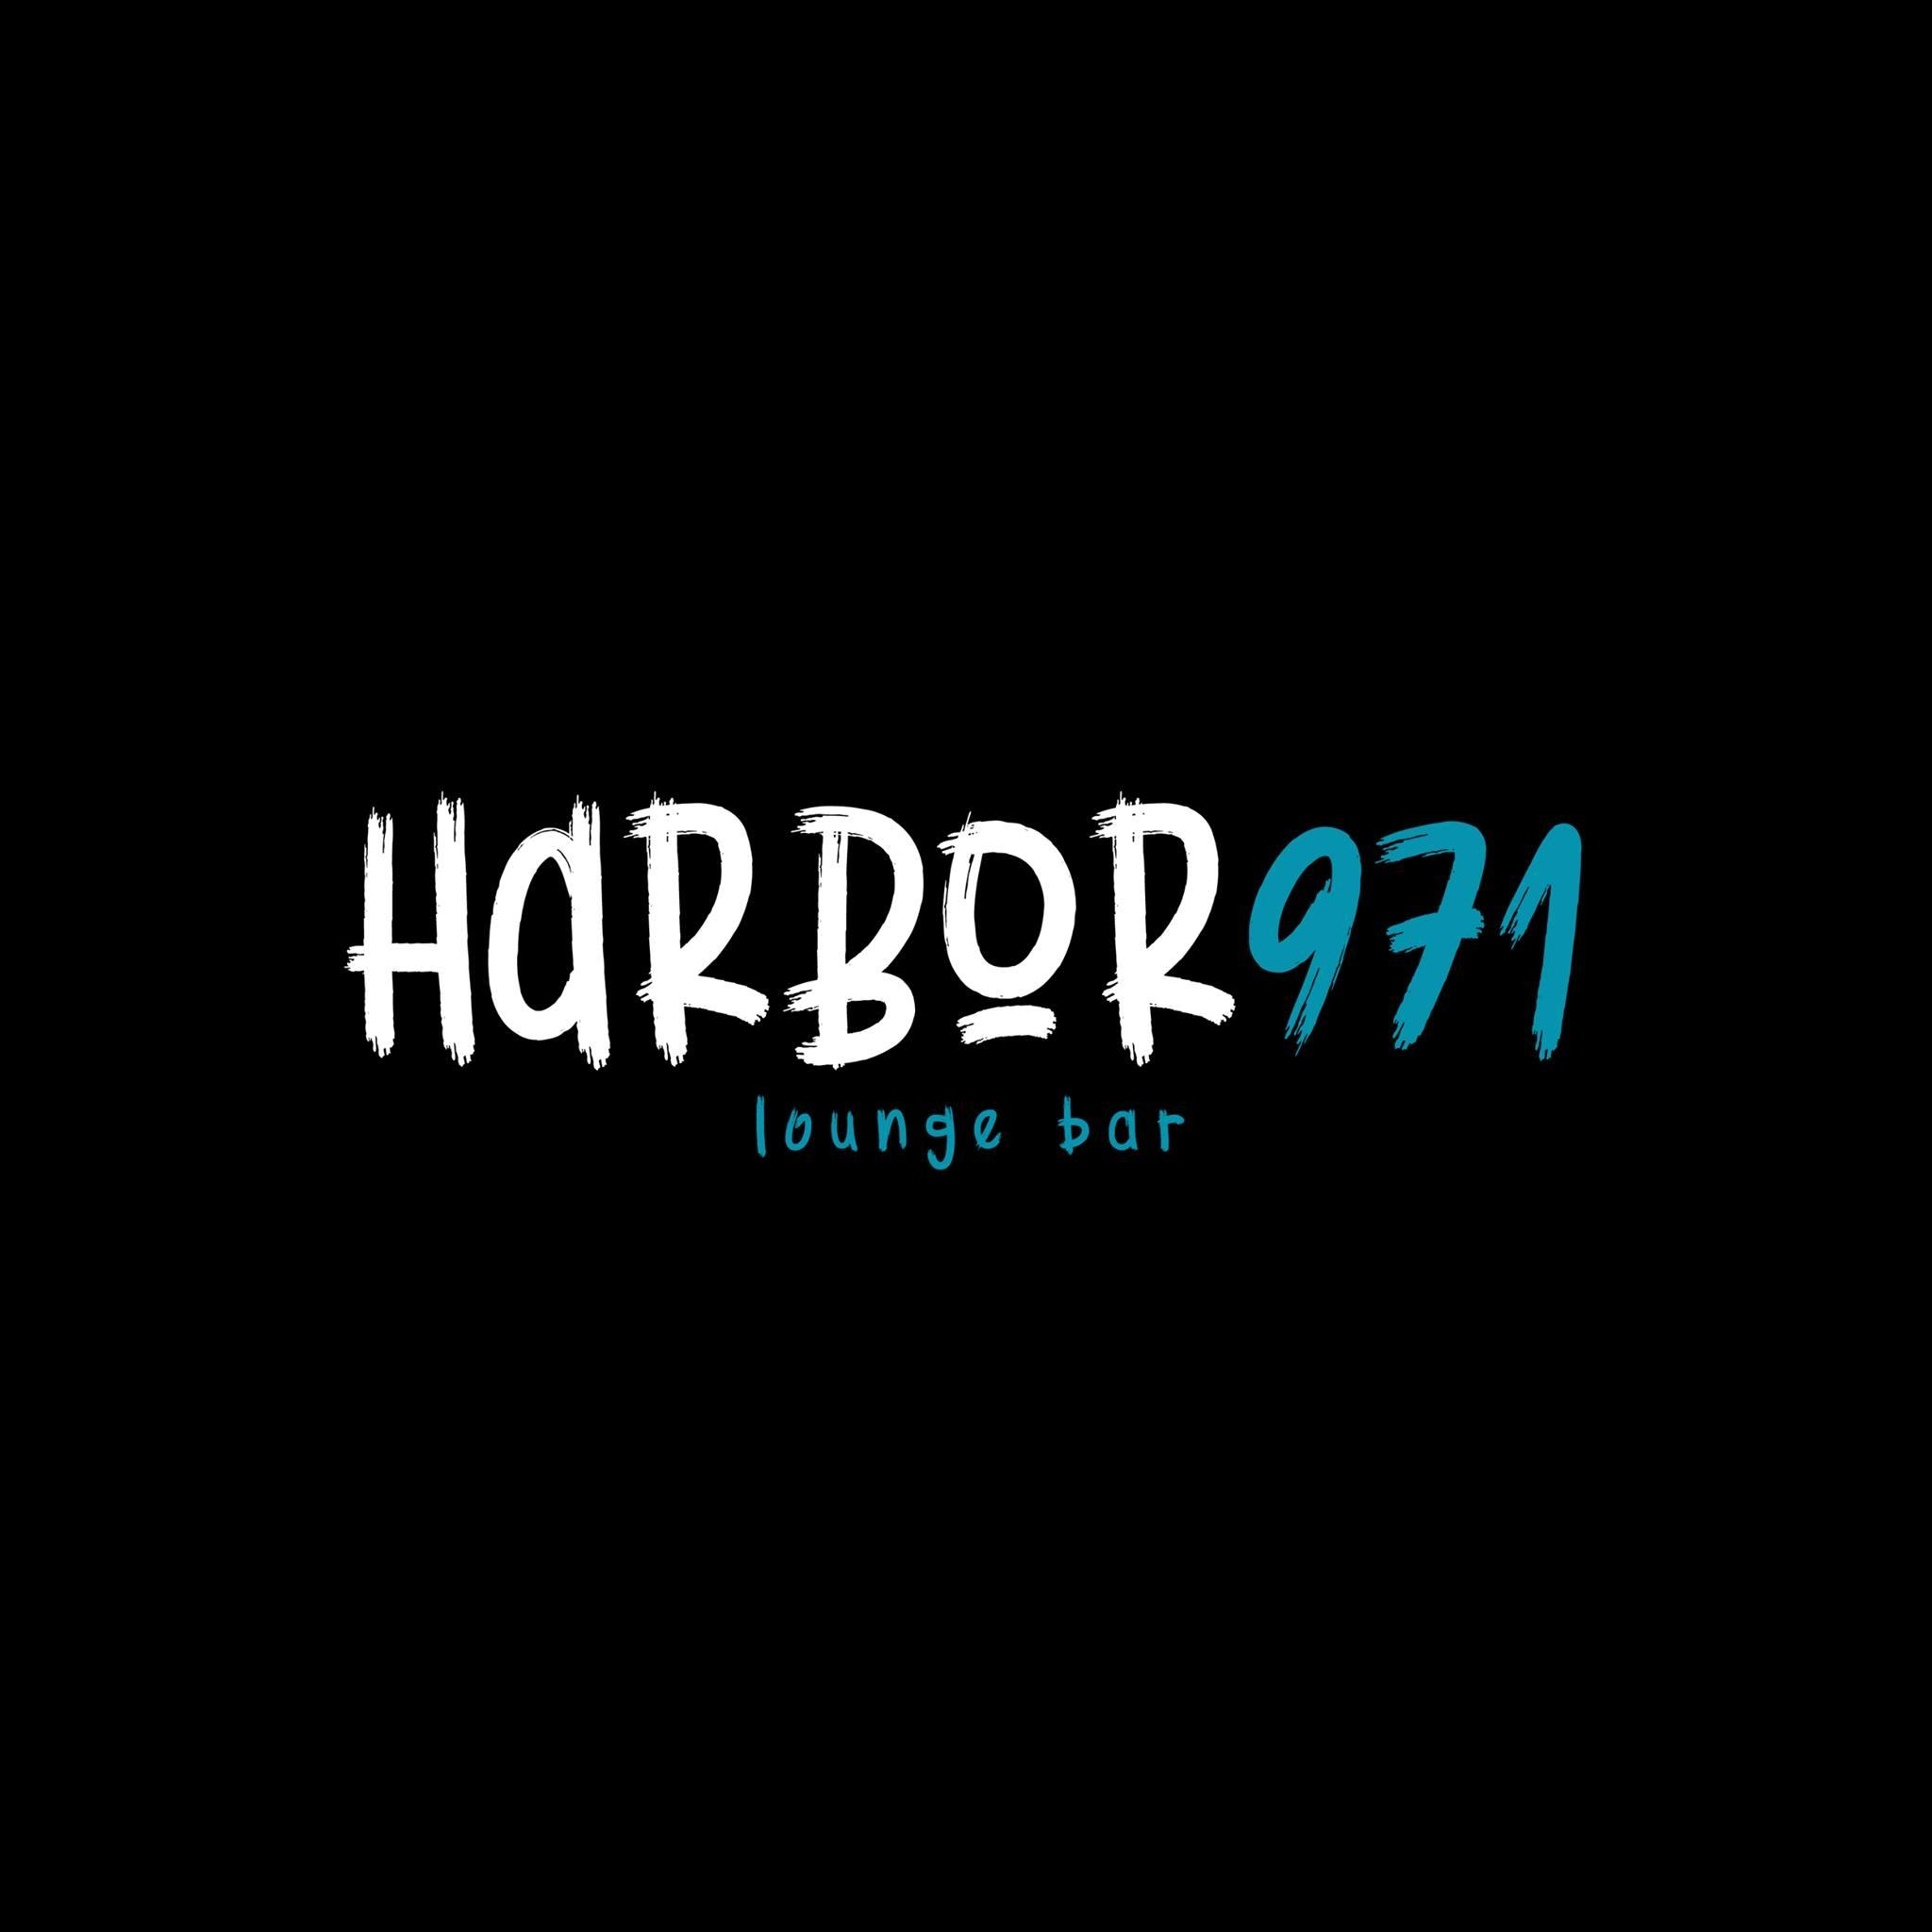 Harbor971